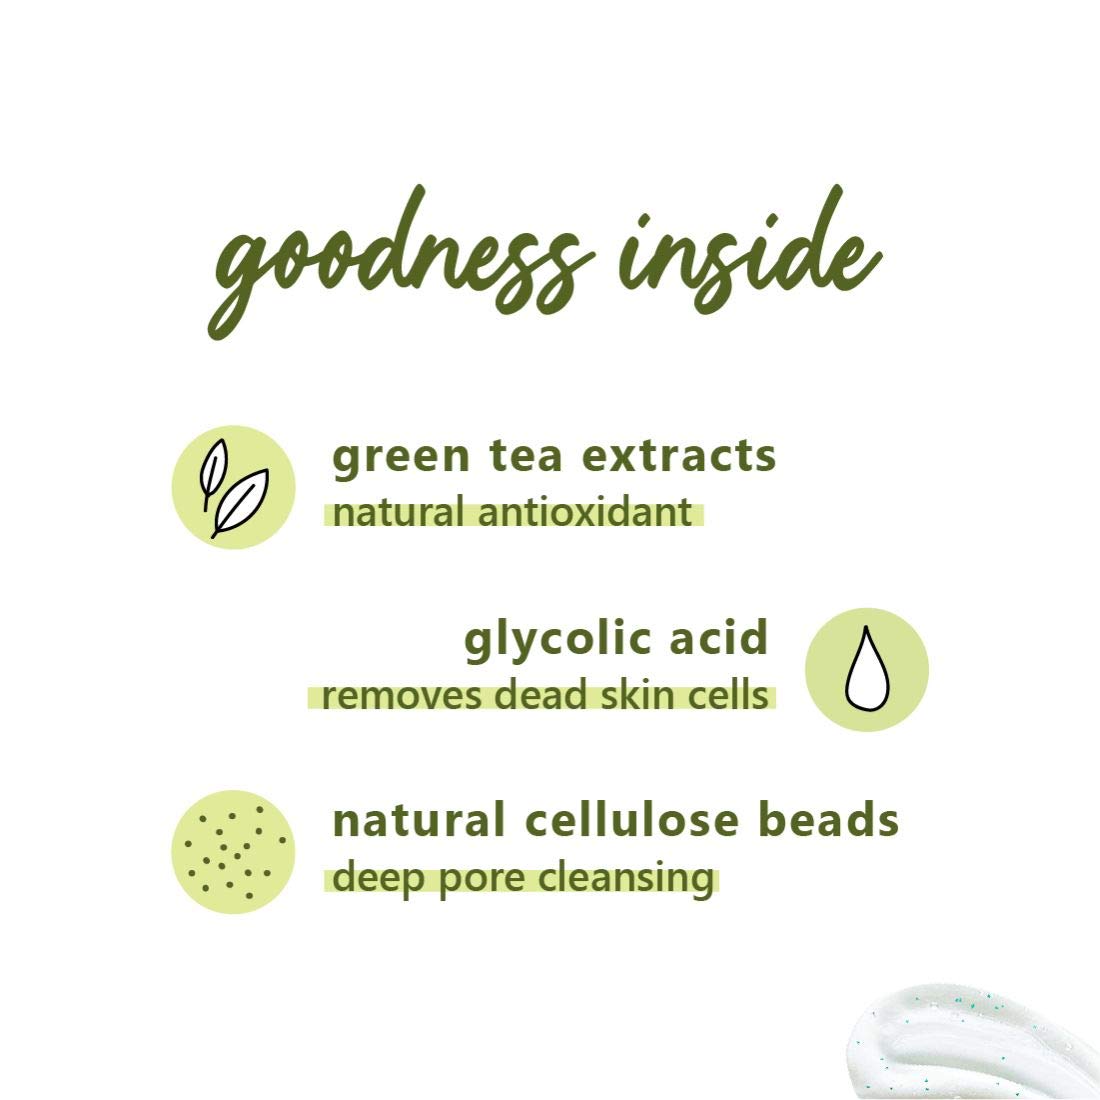 Plum Green Tea Gentle Revival Face Scrub | Blackhead Removal | Green Tea Extracts | For Oily, Acne-Prone Skin | 100% Vegan, Paraben Free | 75g